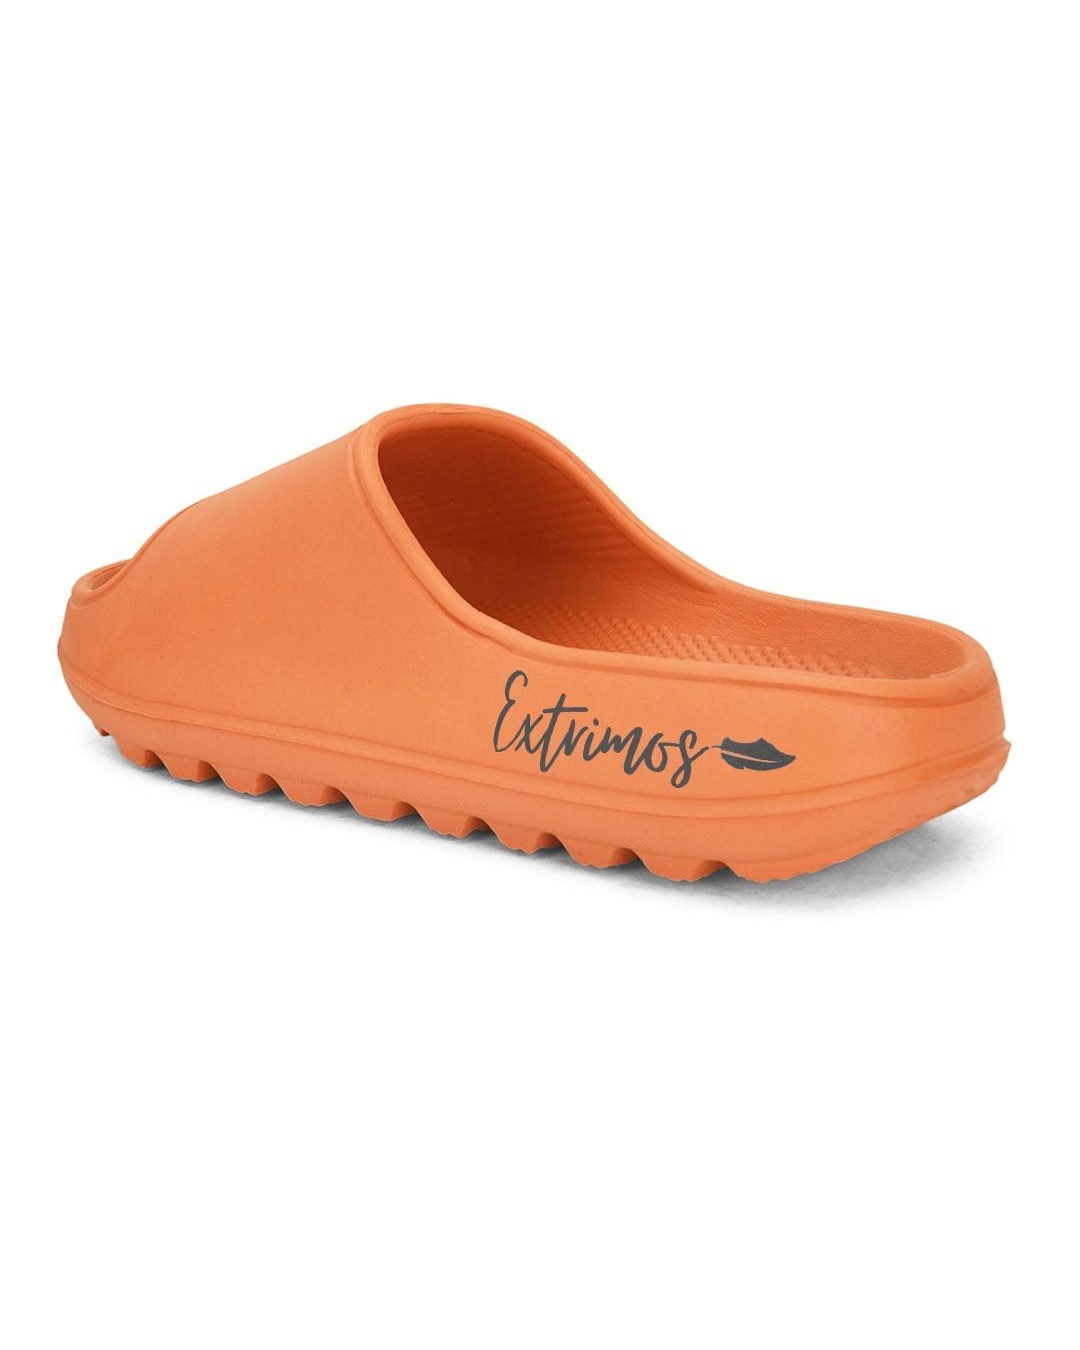 Shop Women's Orange Casual Sliders